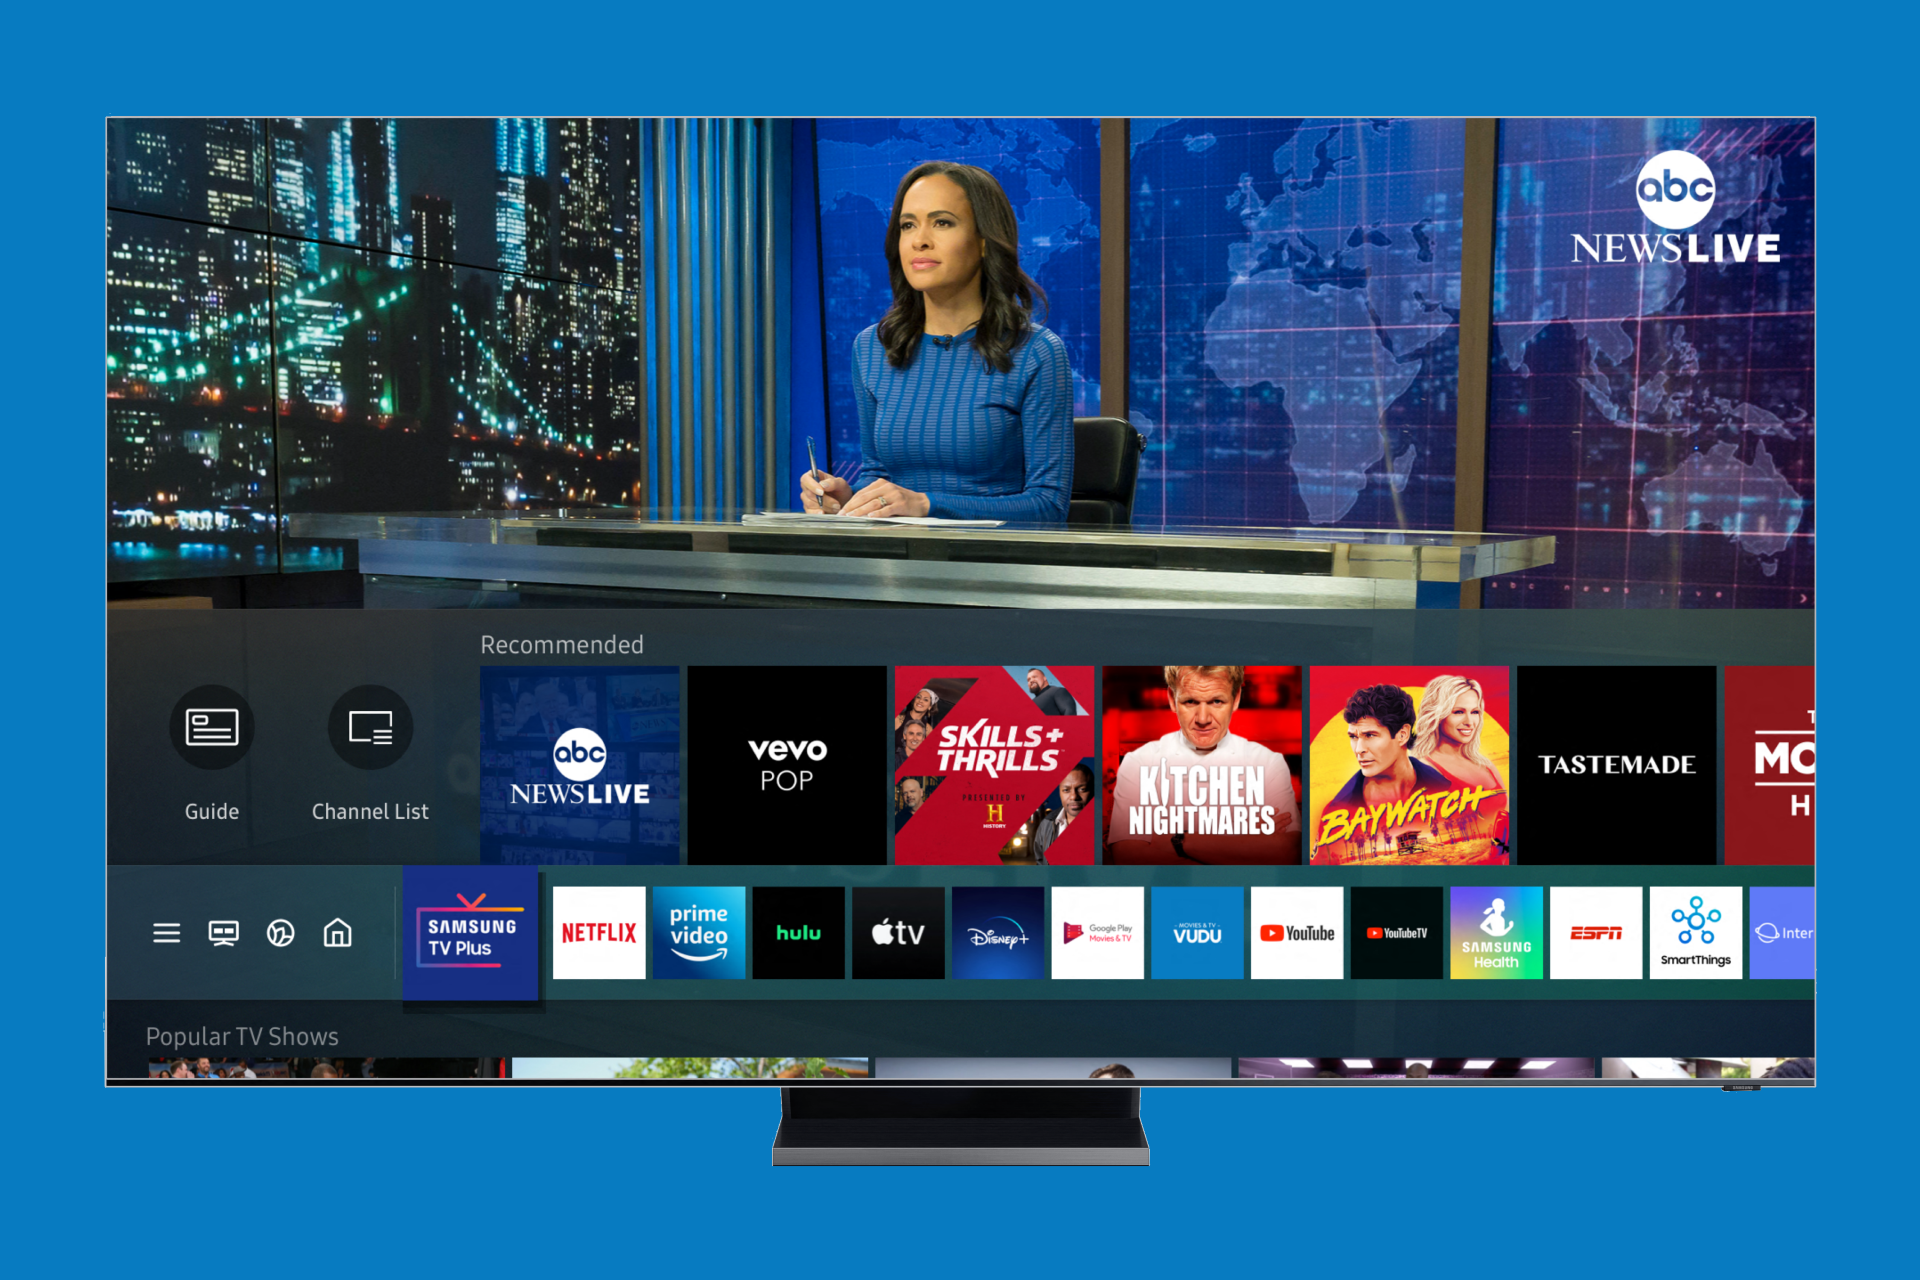 FIFA+ Channel Added to Samsung TV Plus - Samsung US Newsroom